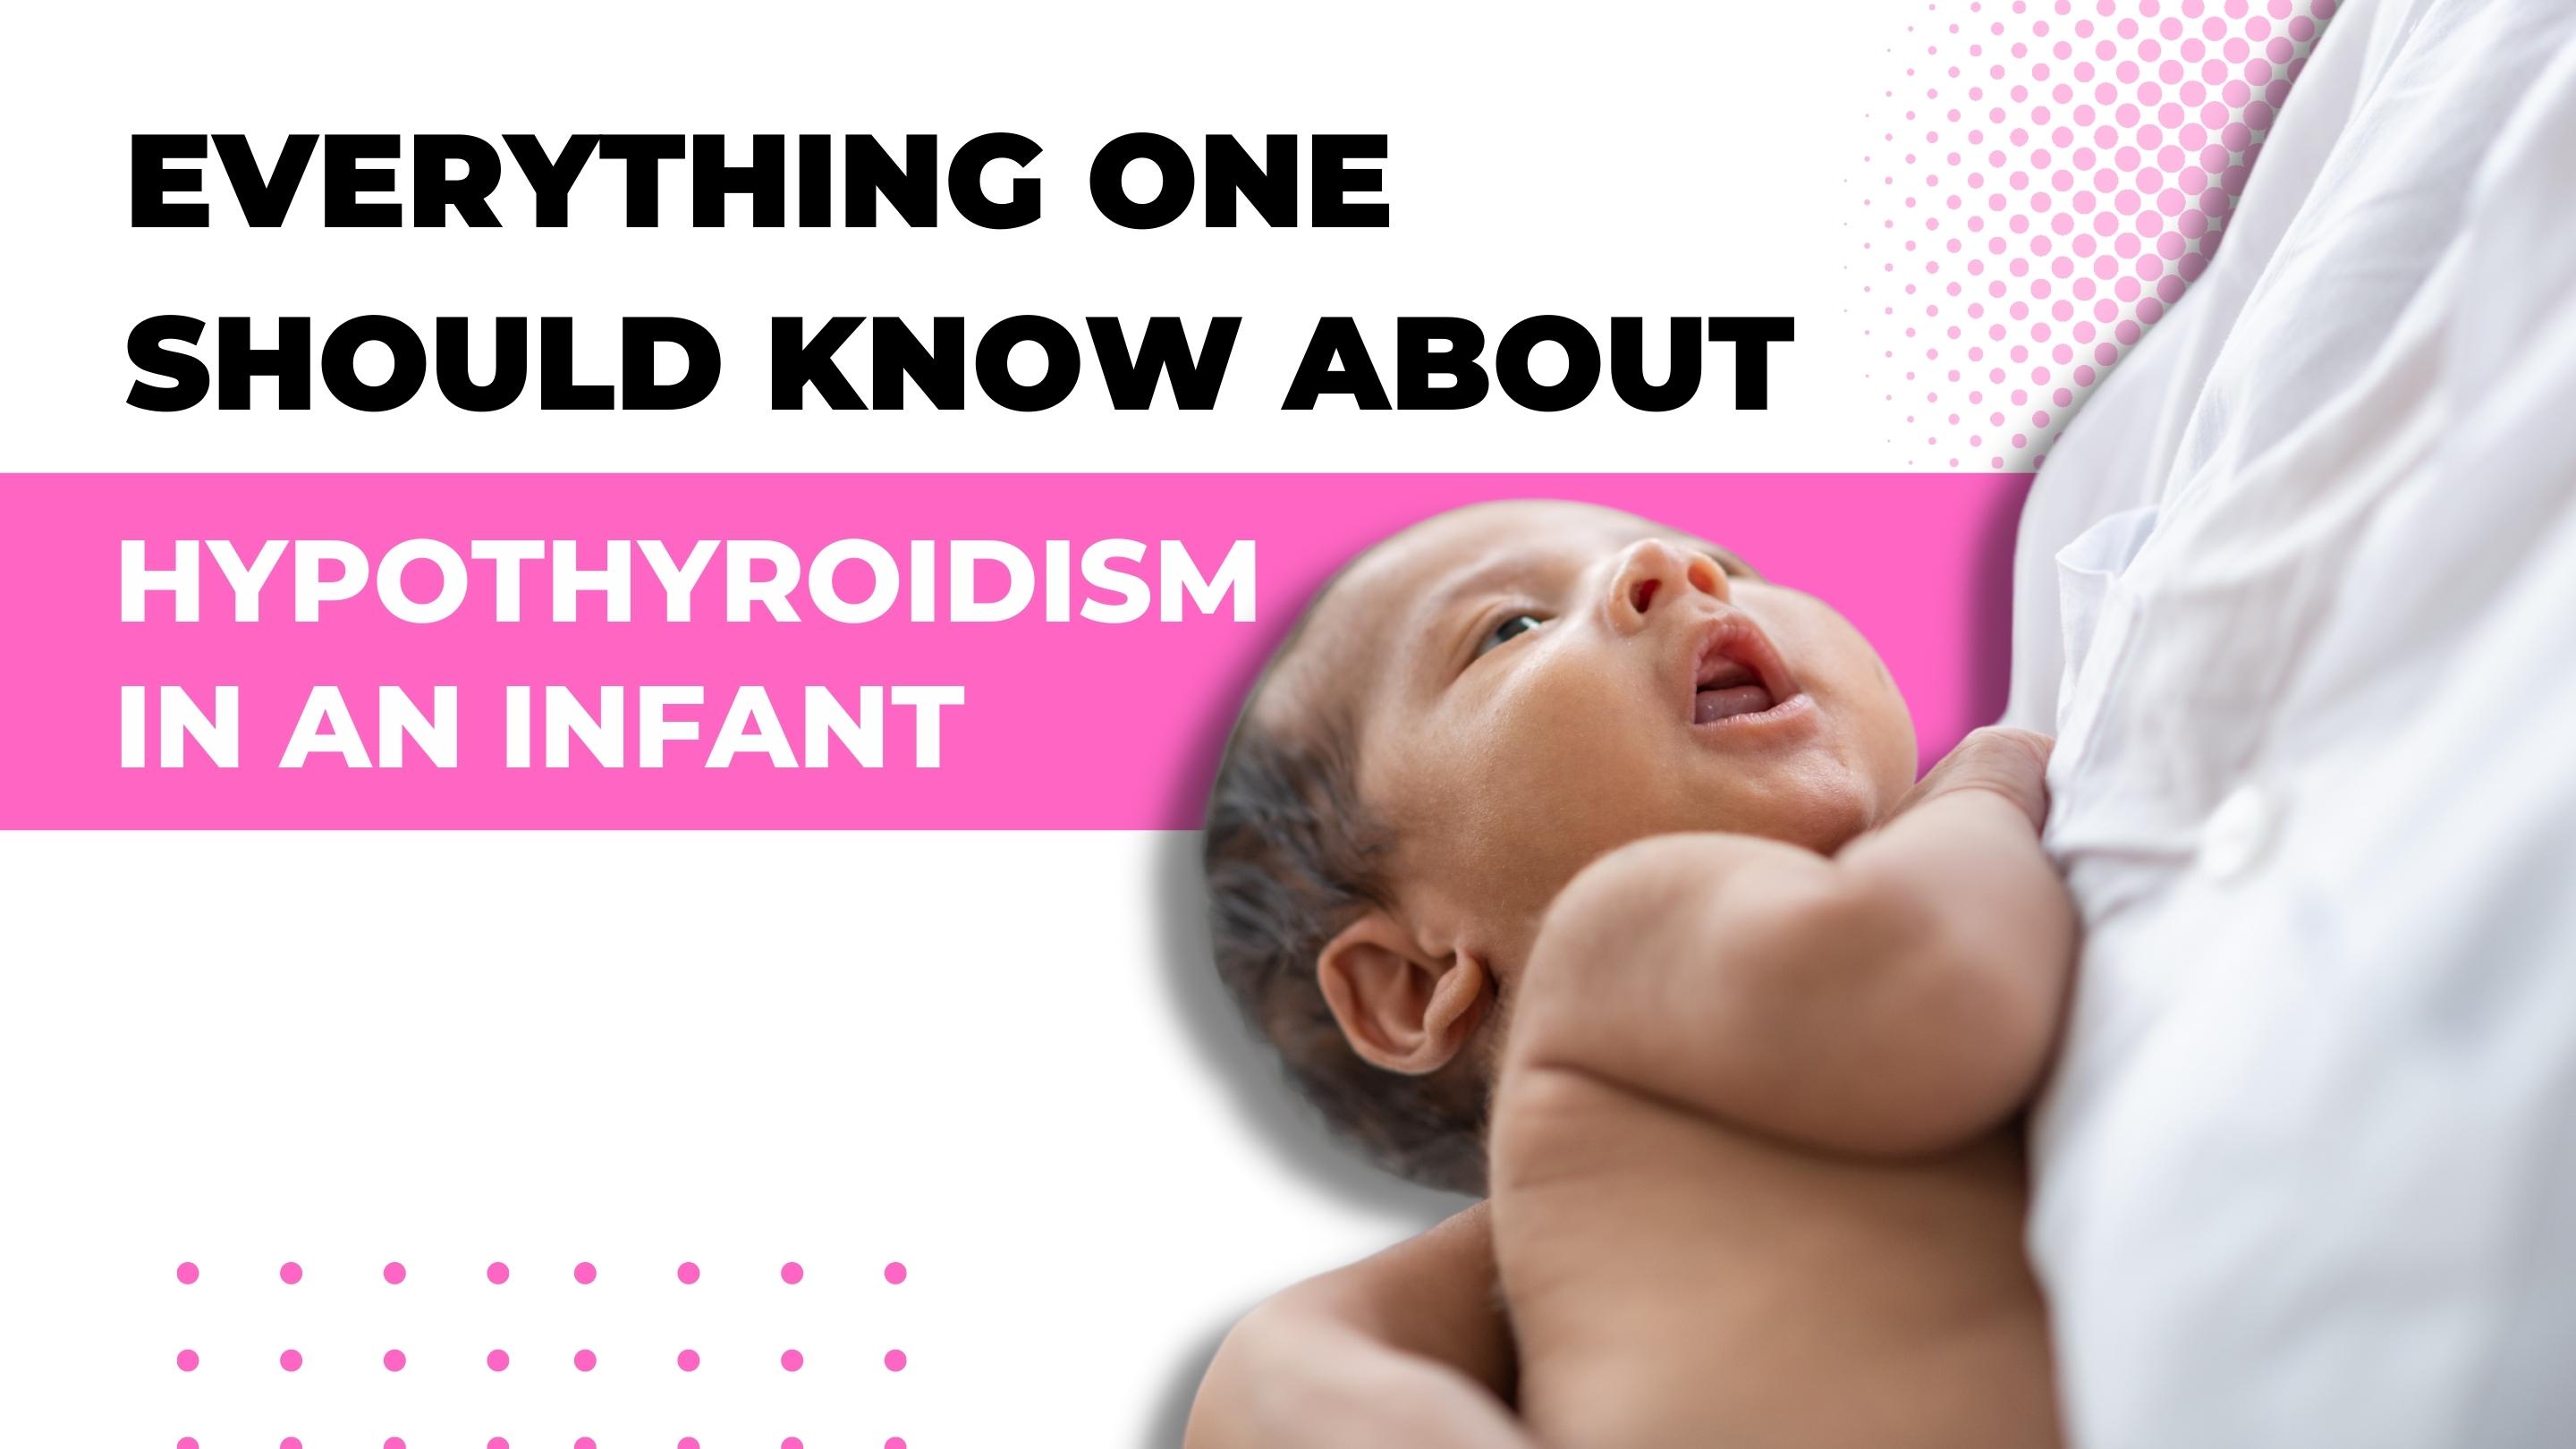 Hypothyroidism in an Infant